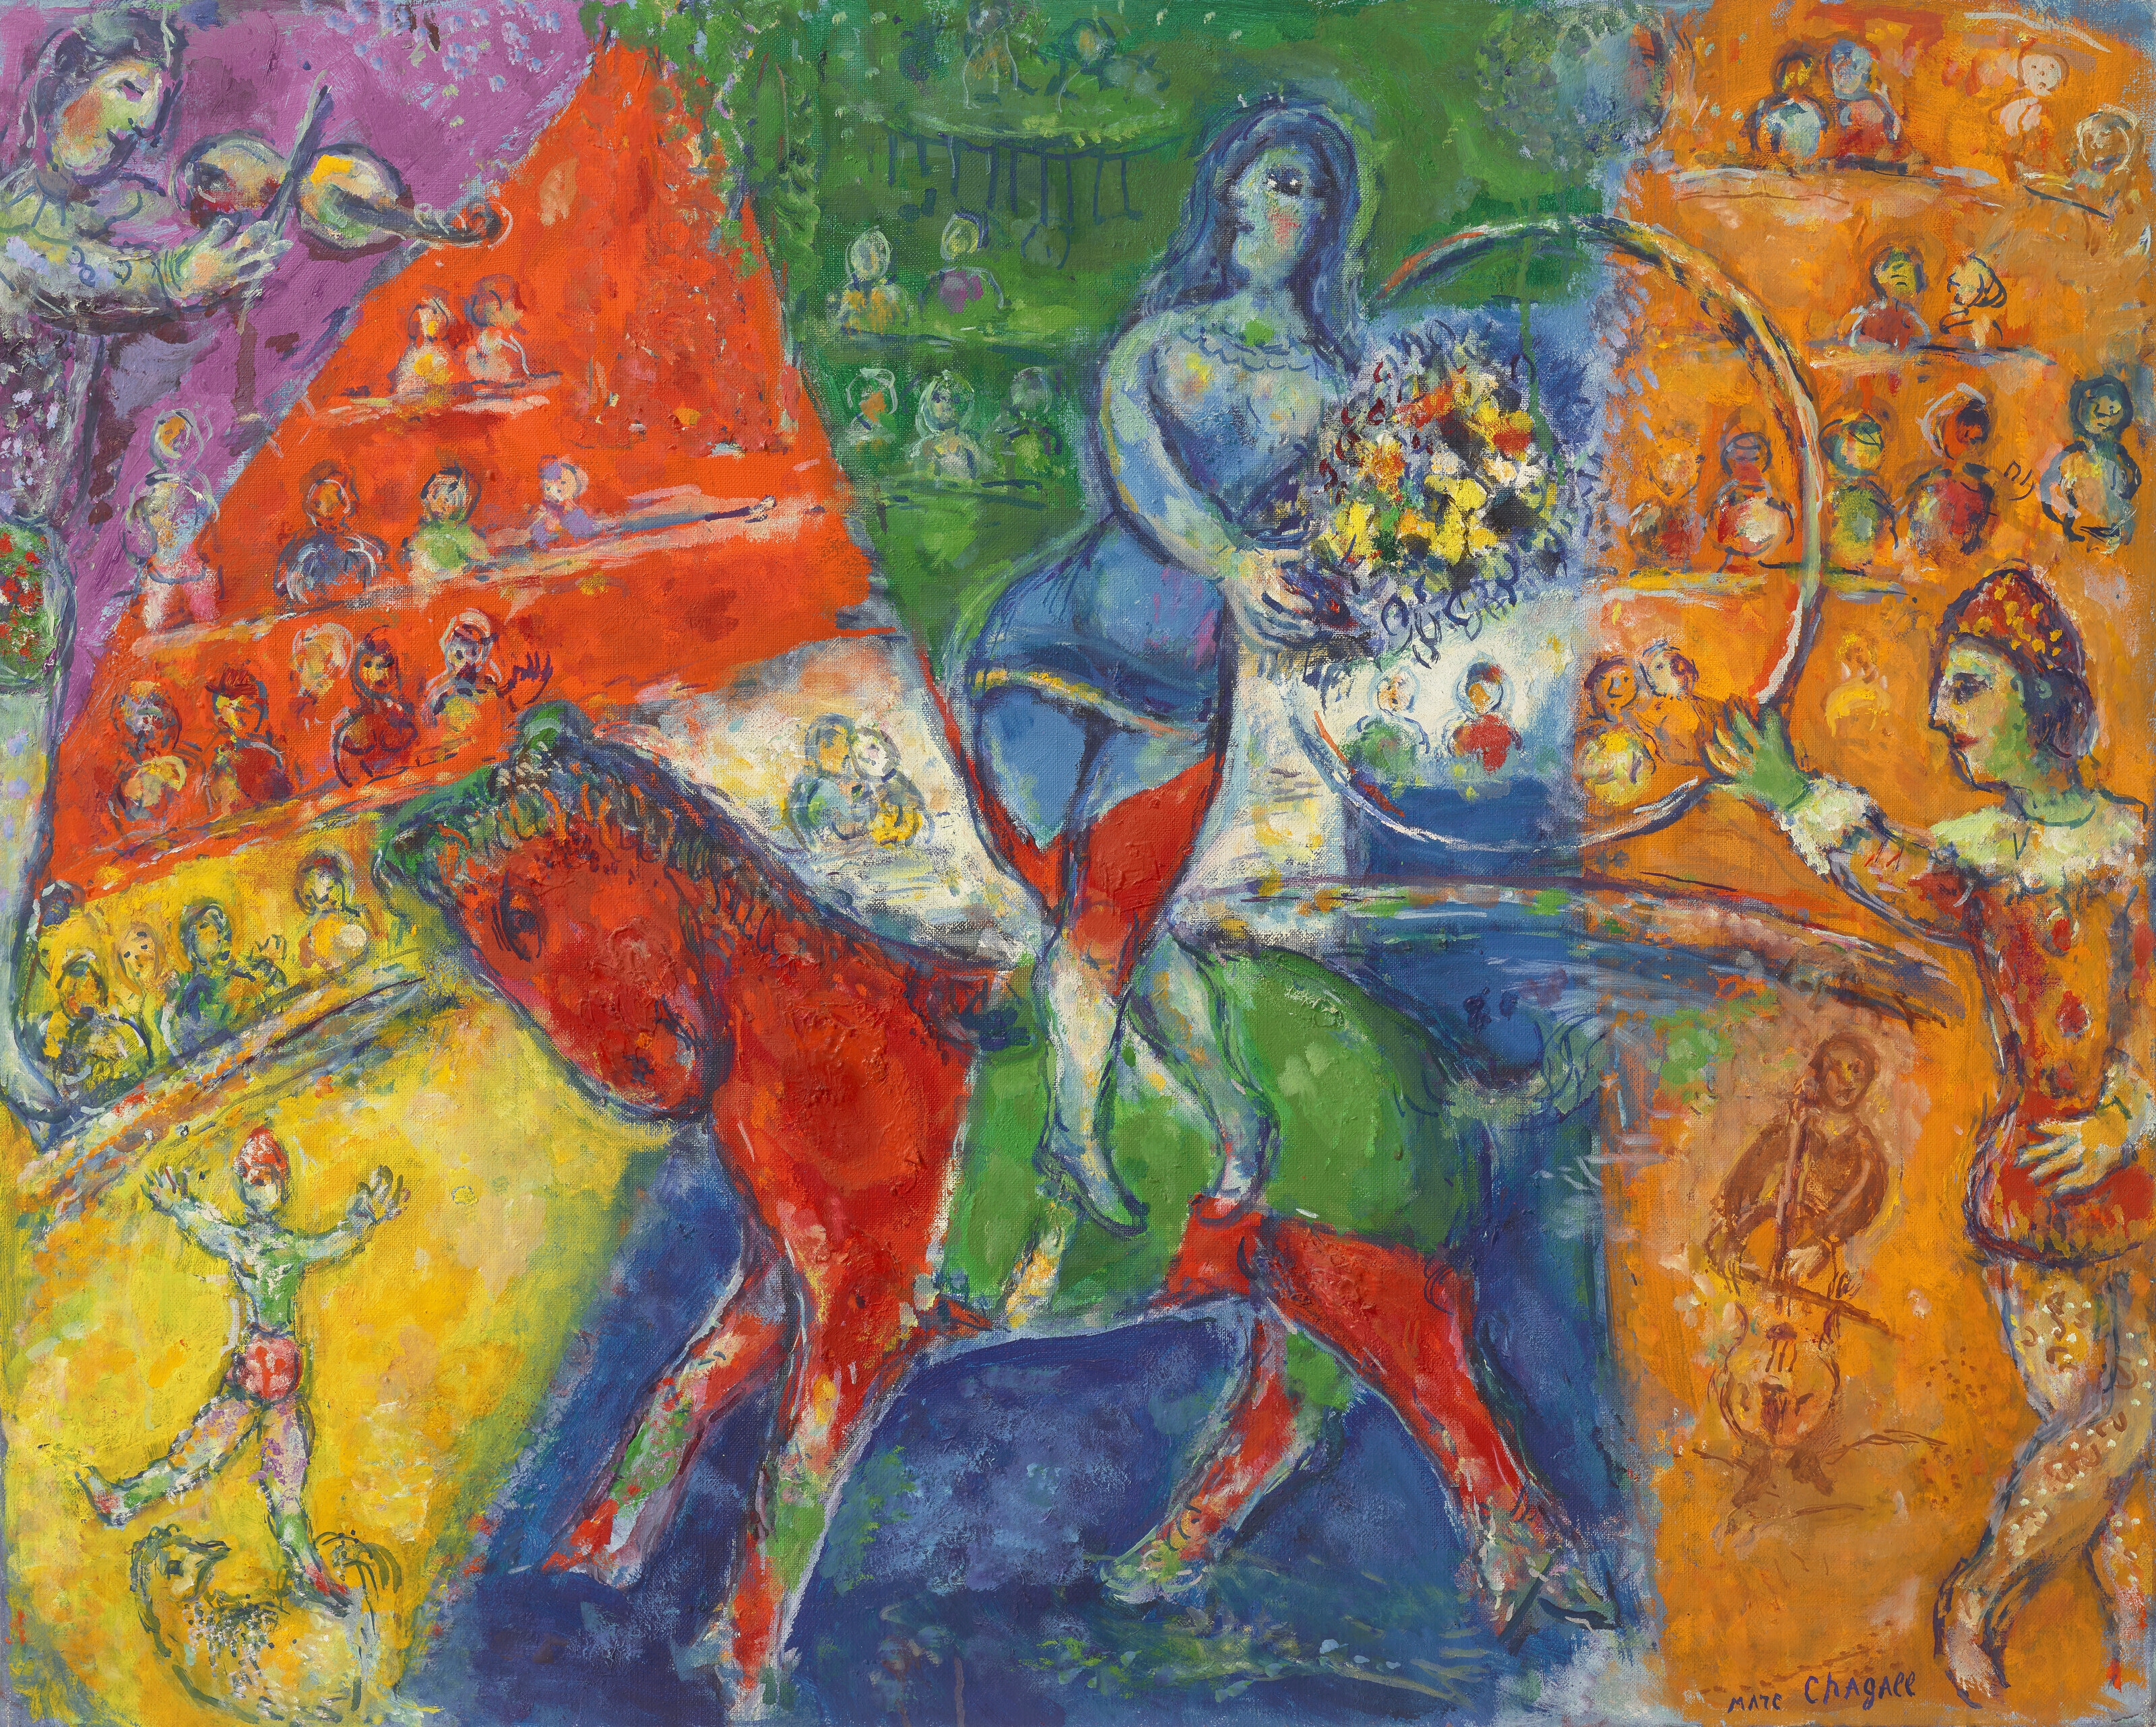 Le cirque rouge et bleu by Marc Chagall, Painted circa 1969-1973